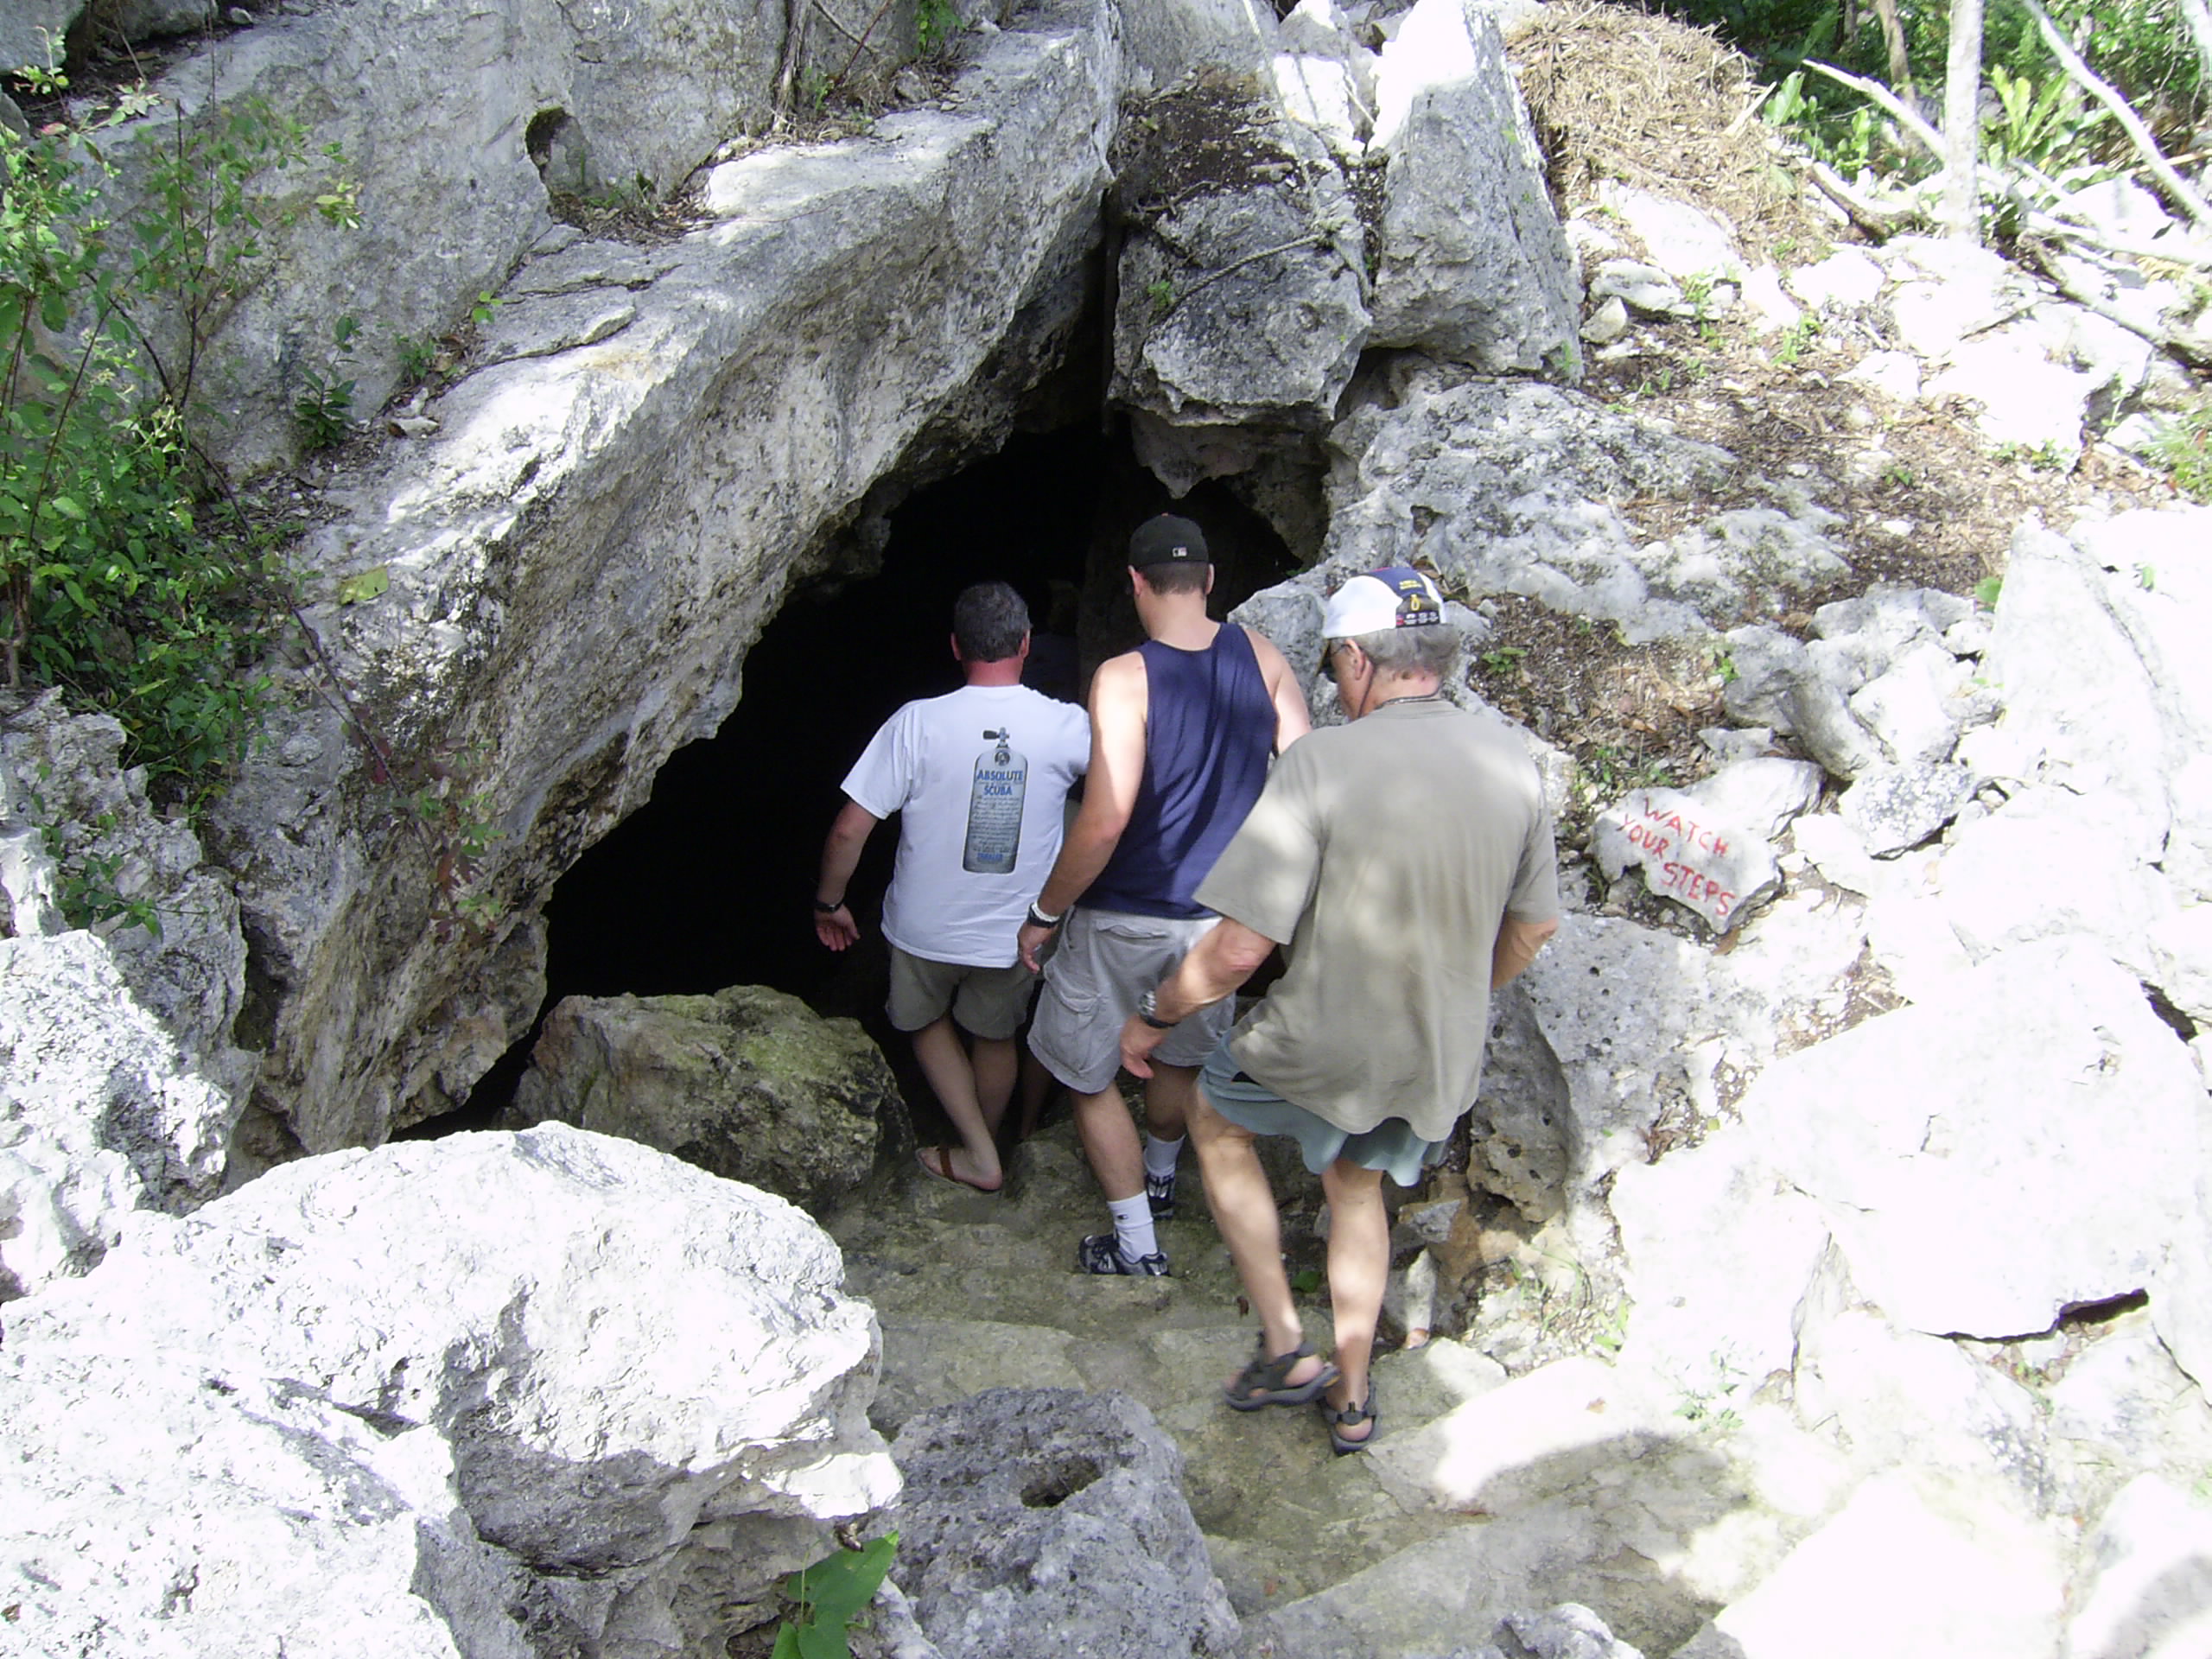 Cavern entrance